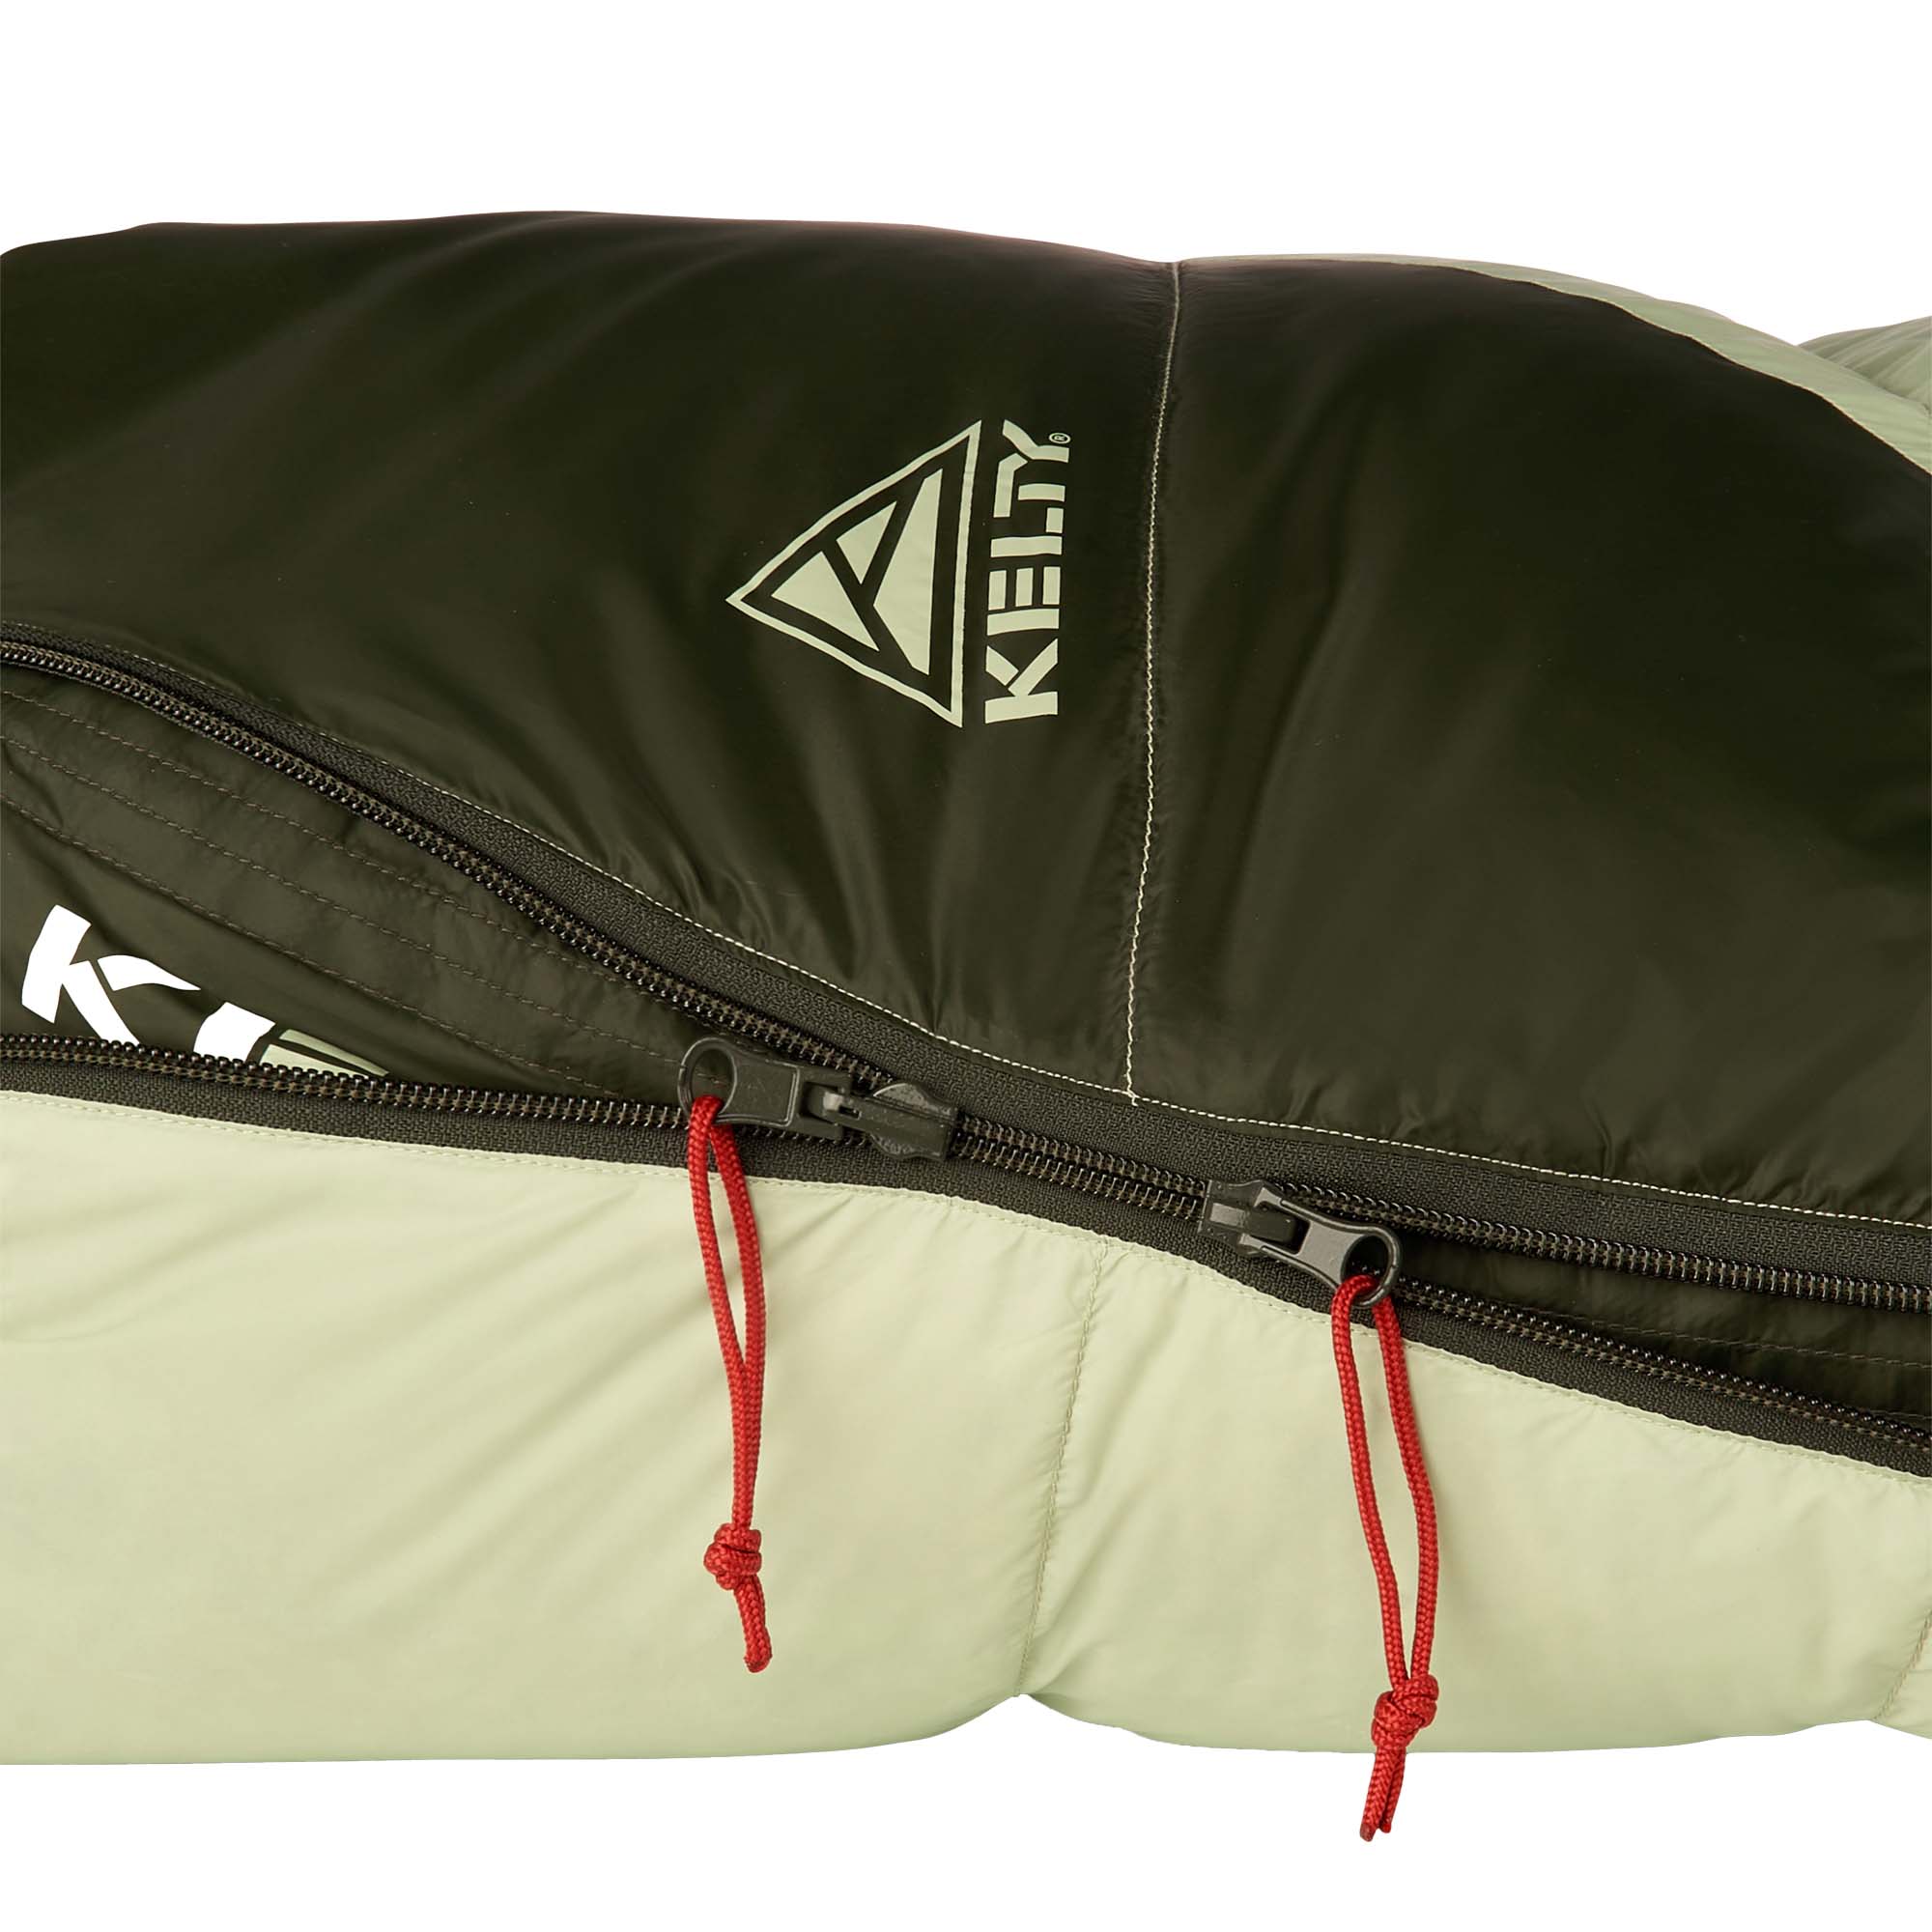 Kelty Women's Cosmic Down 20° Lightweight Sleeping Bag